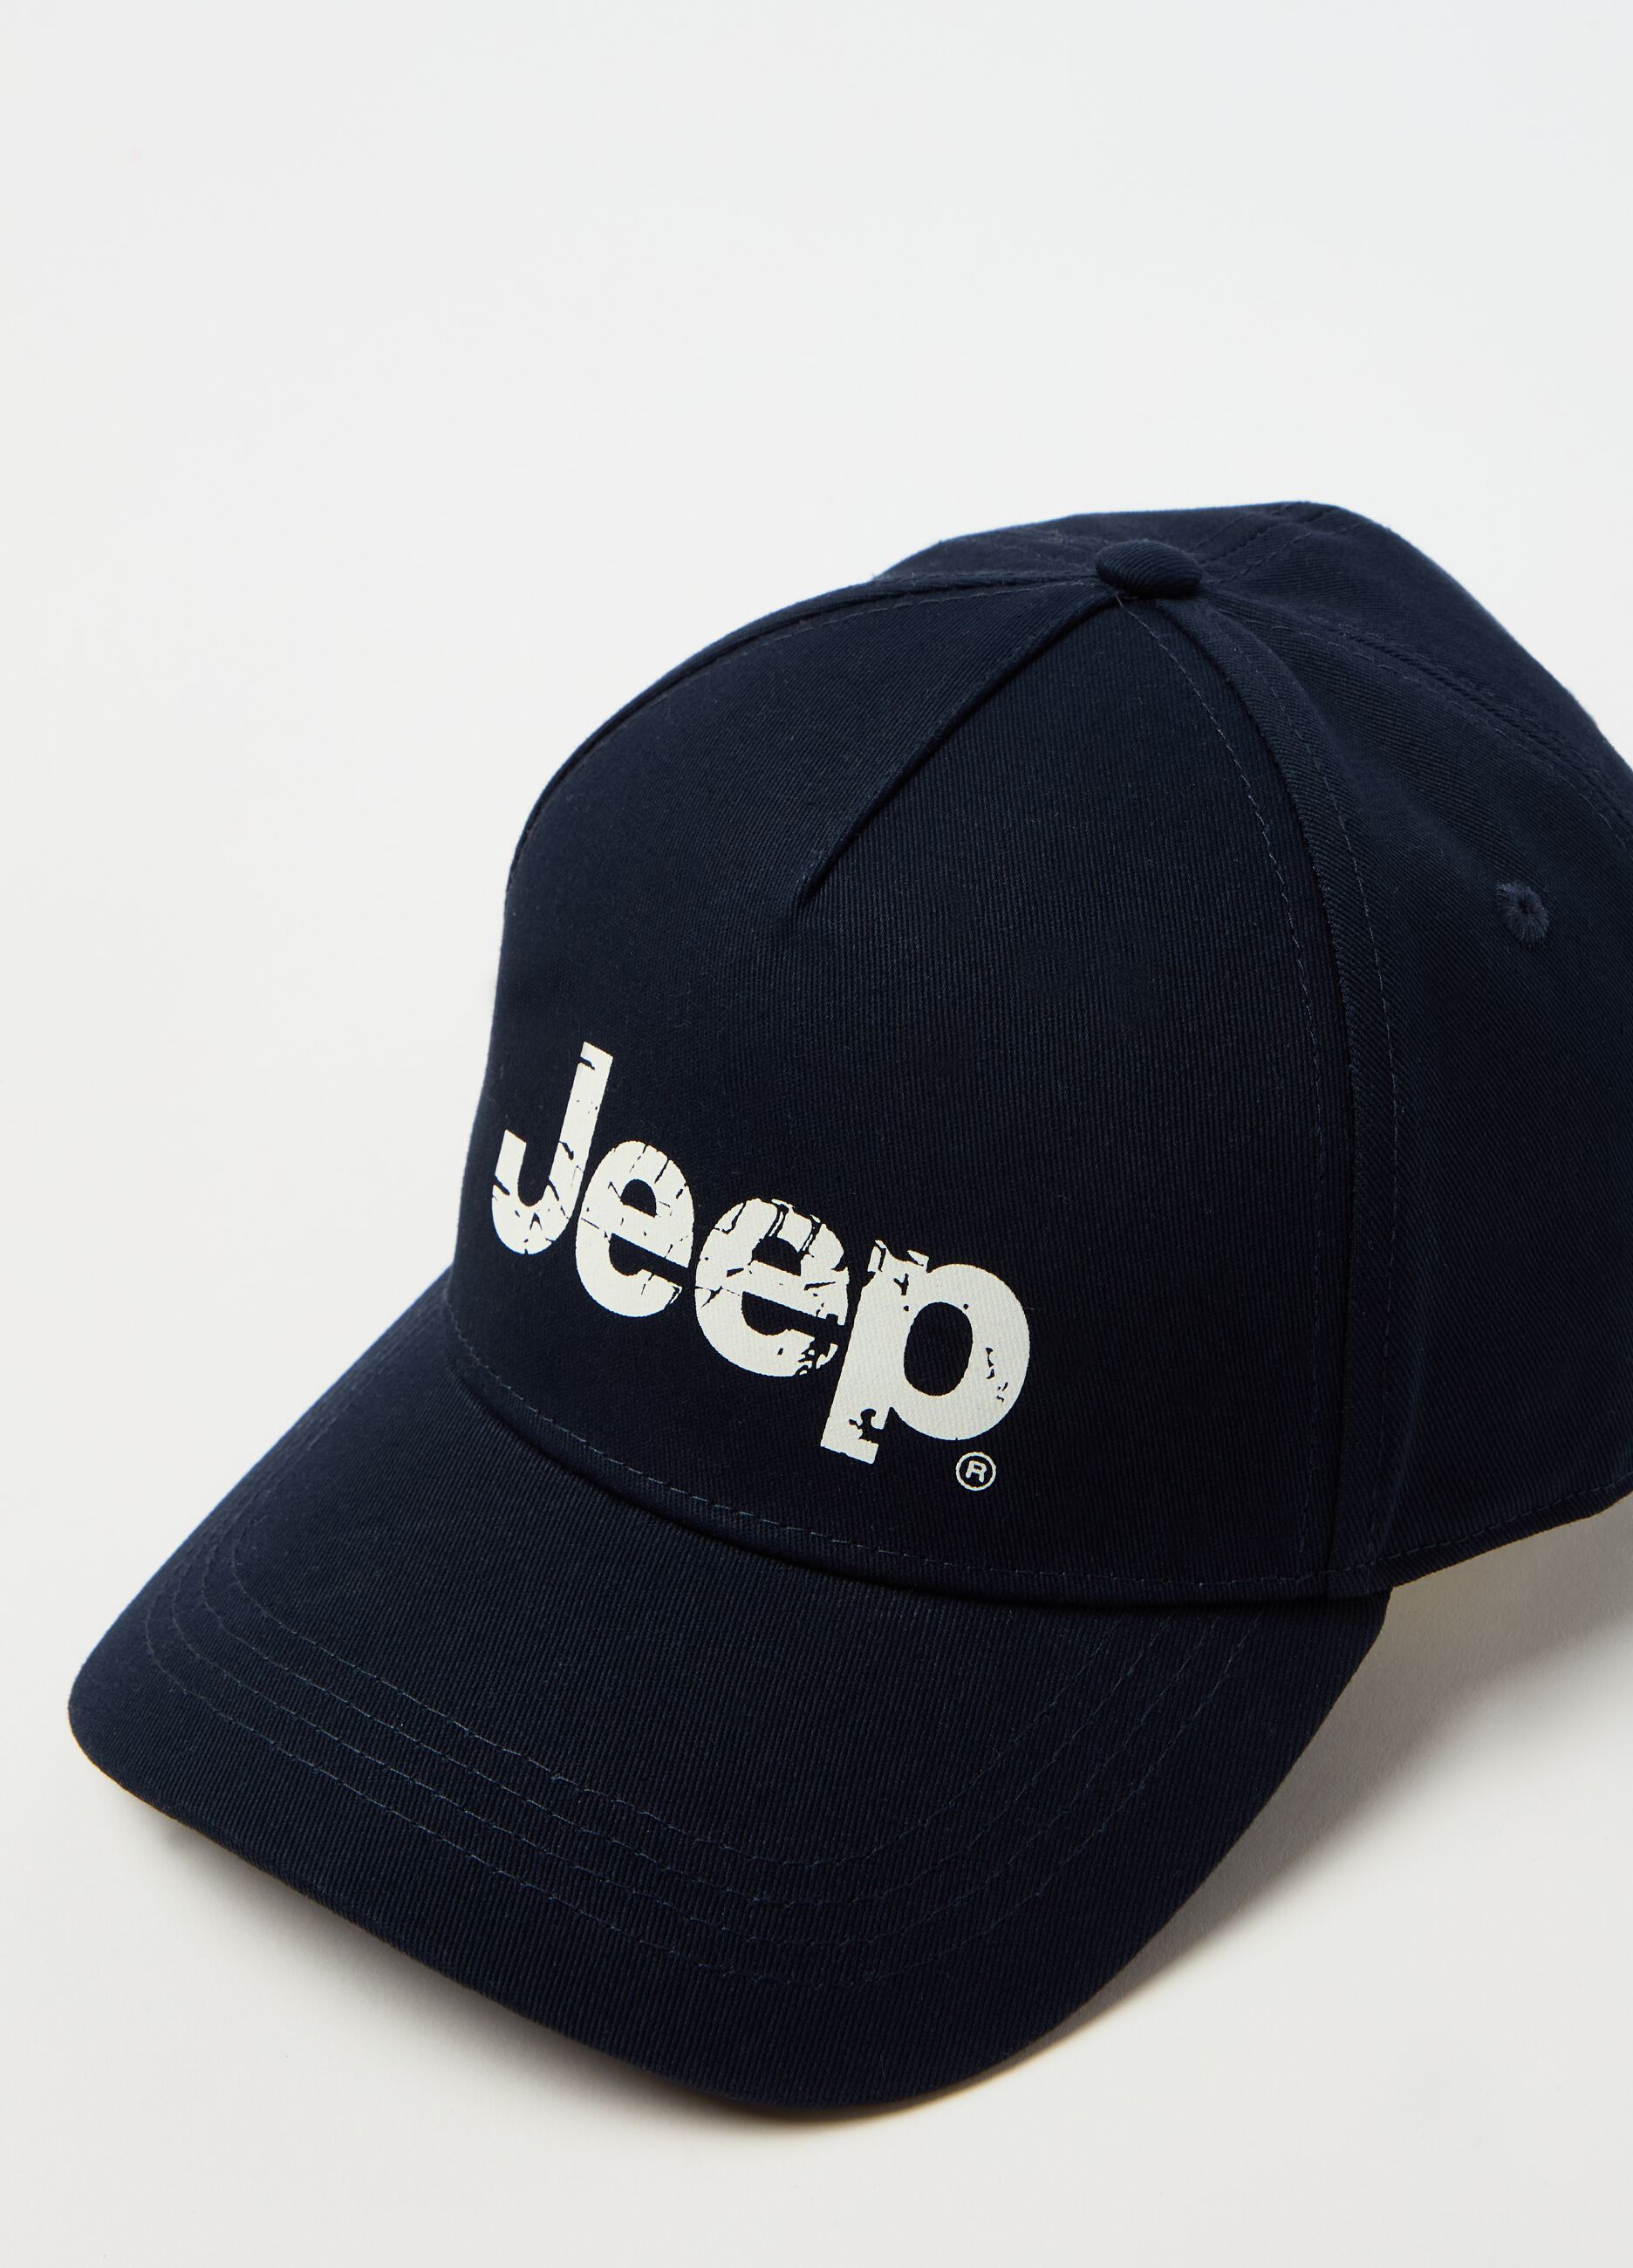 Baseball cap with Jeep print